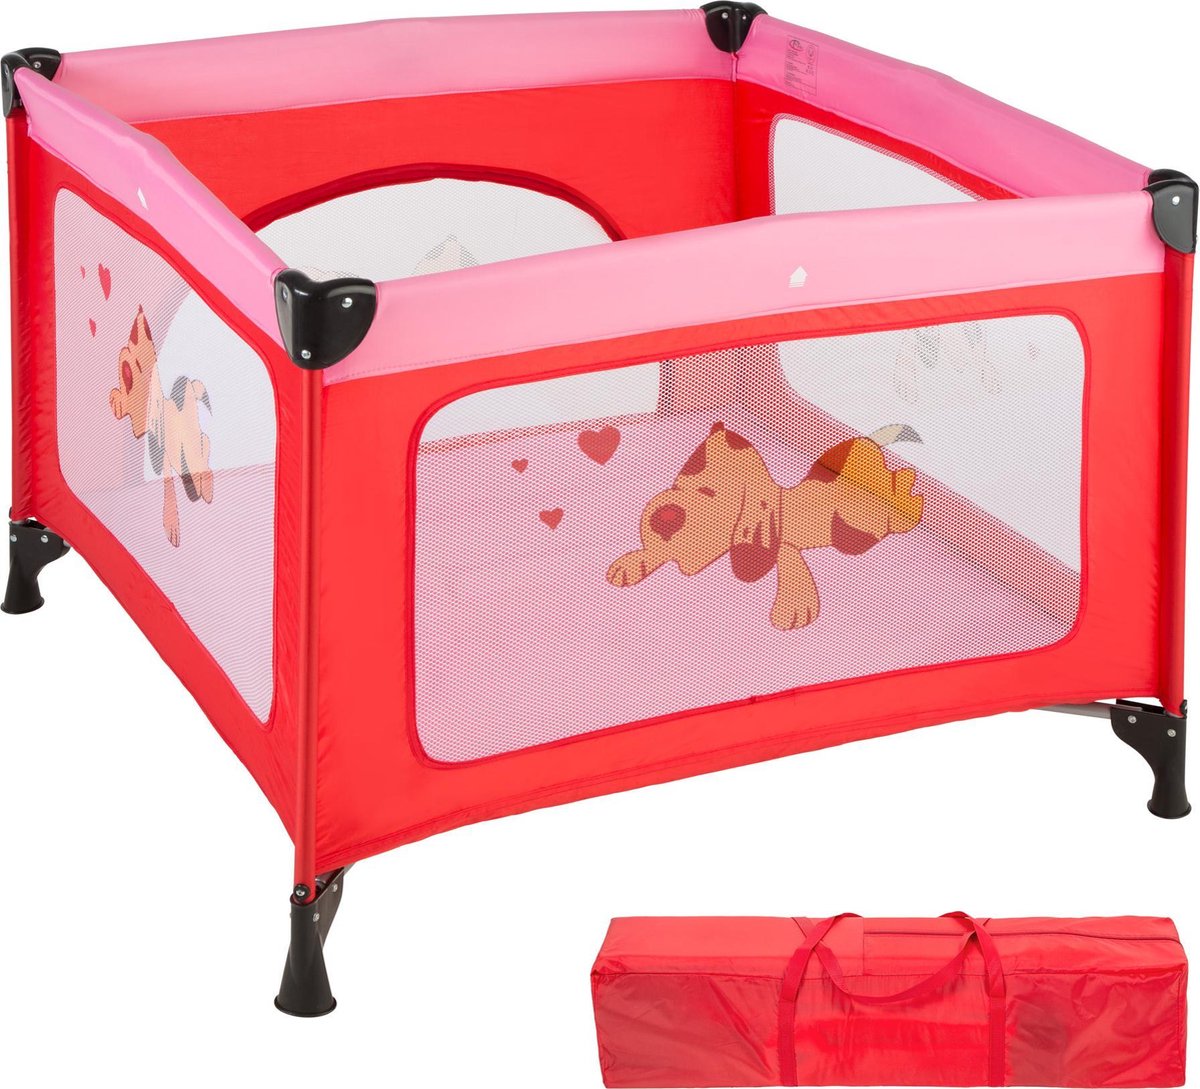 tectake - Baby box Tommy Junior Reisbed 105x105x78cm - pink - 402206 - Tectake